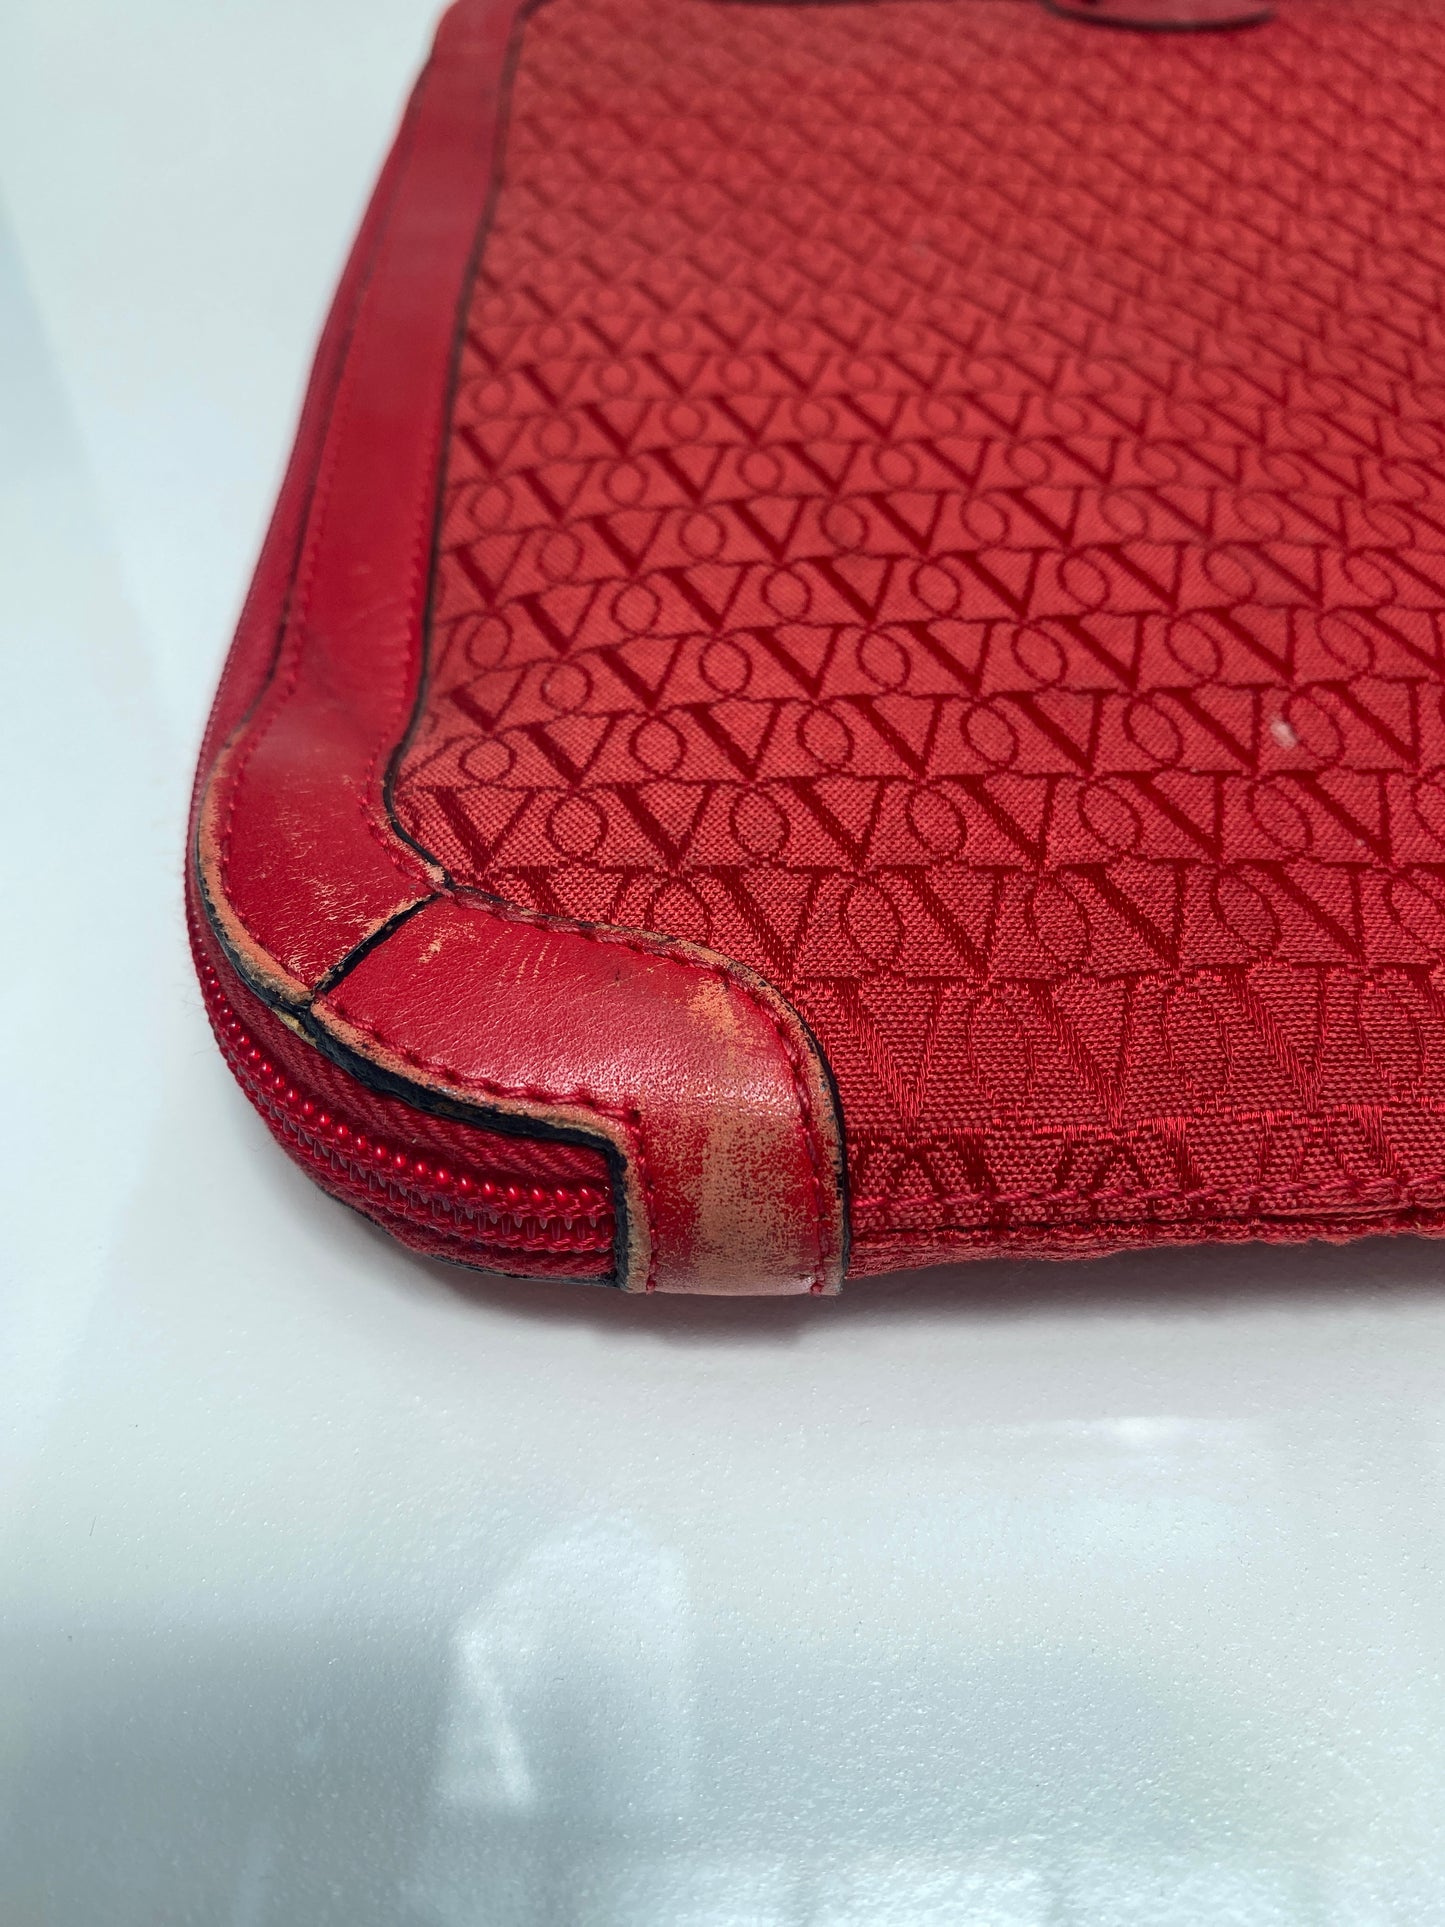 Valentino Red Canvas Briefcase